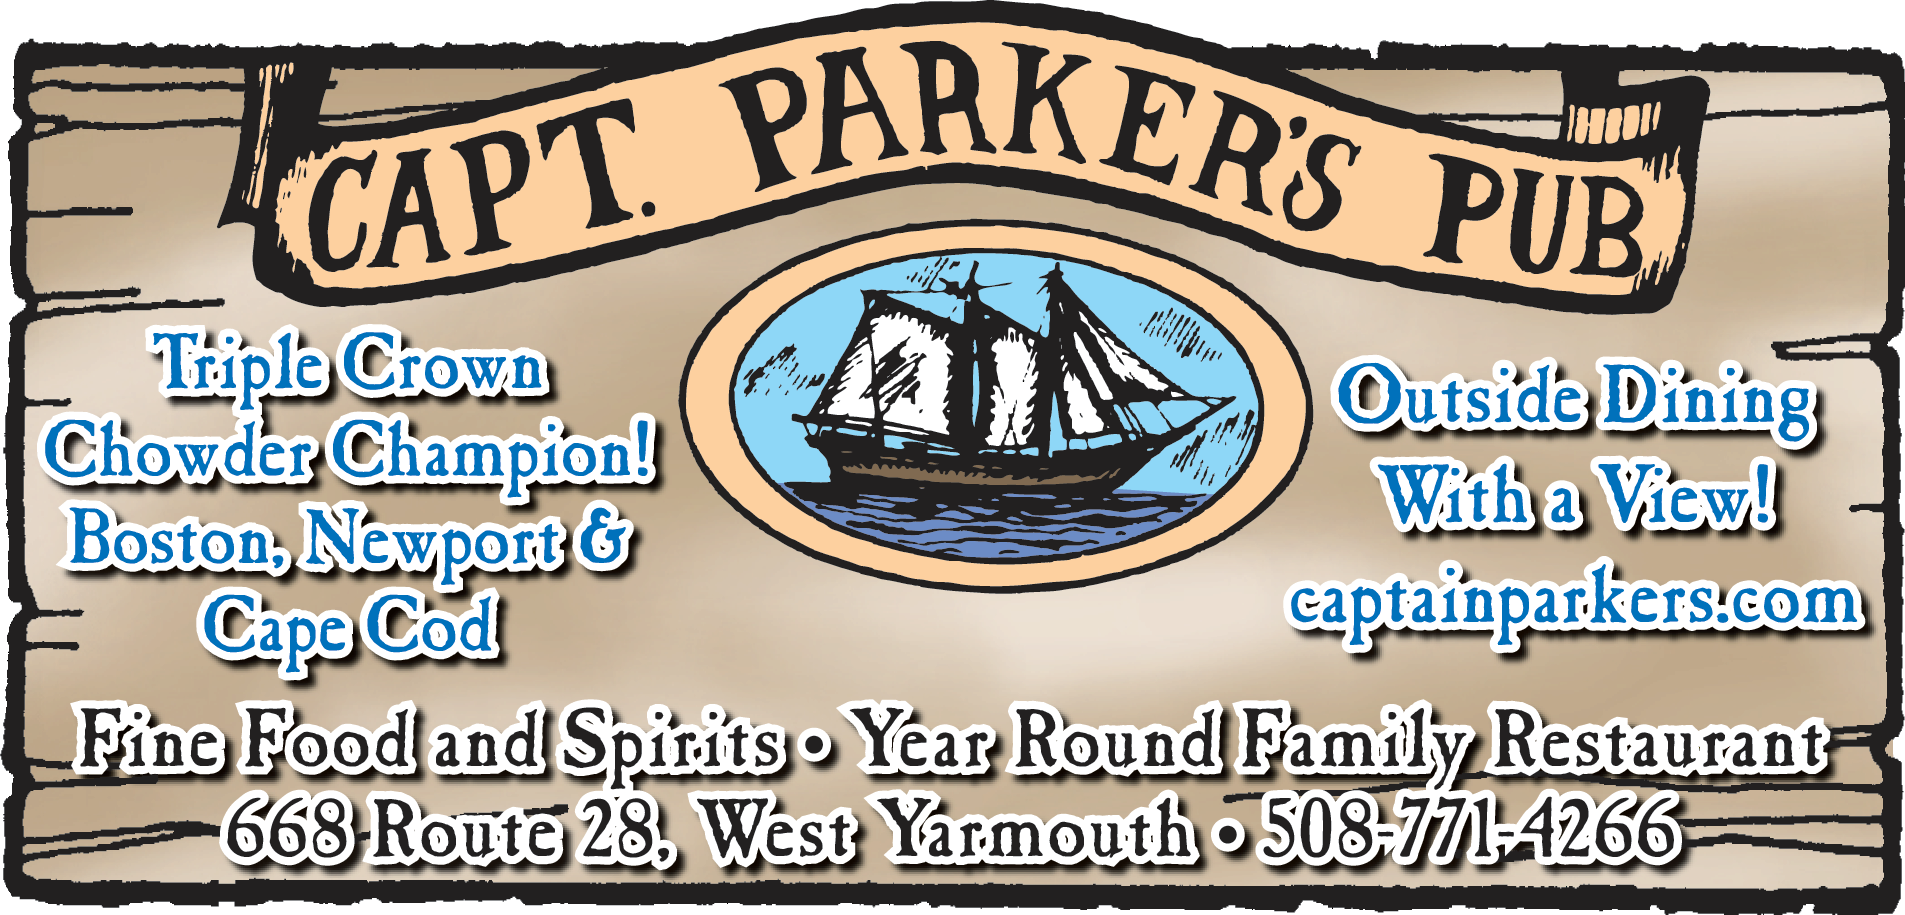 Capt. Parker's Pub Print Ad